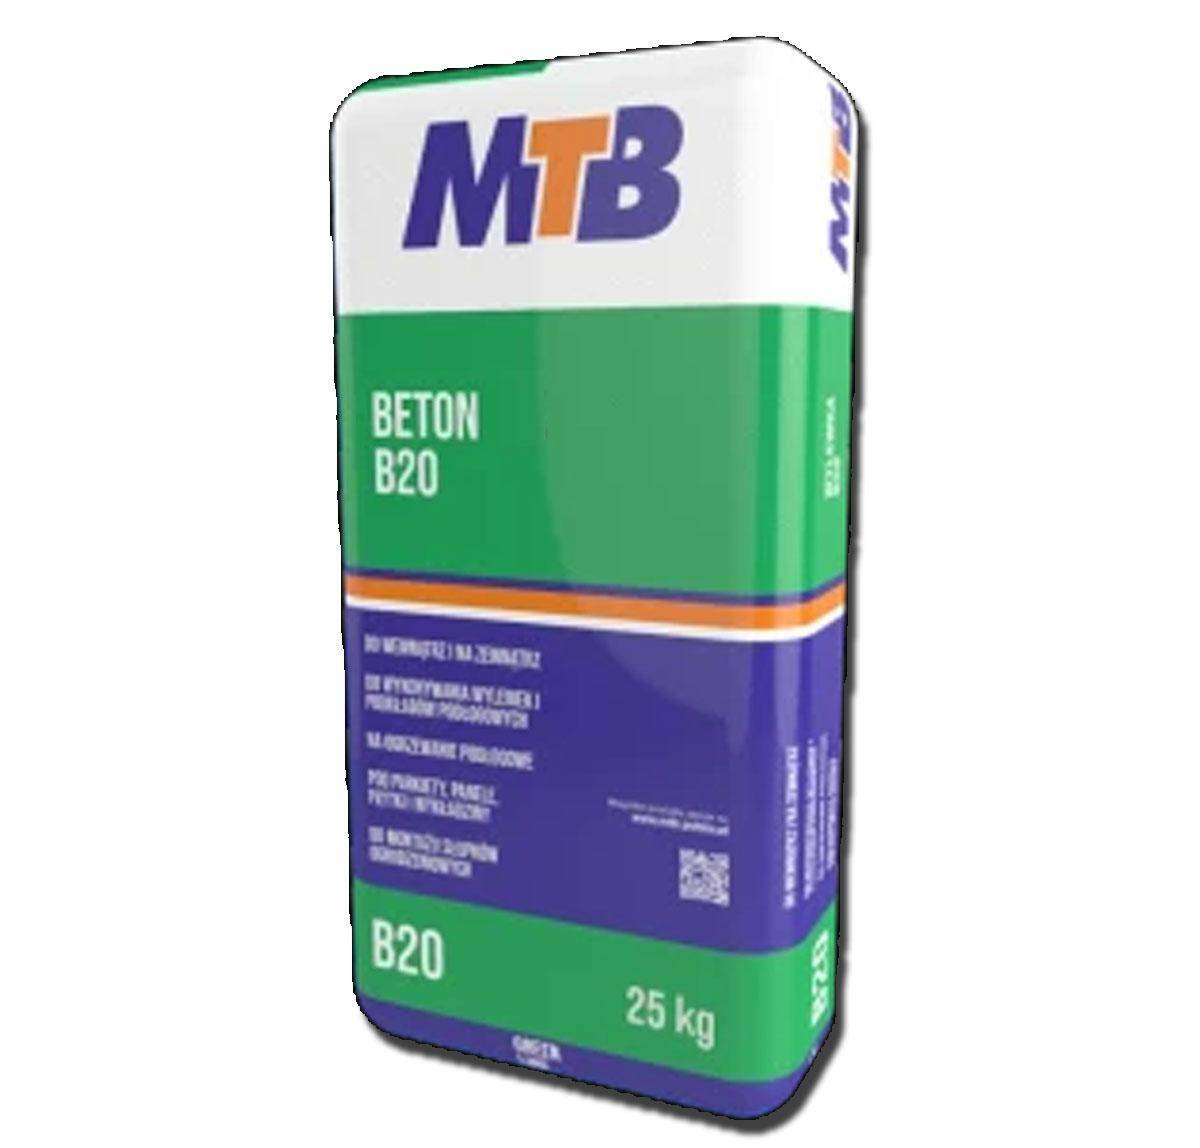 BETON B20 25kg  MTB wylewka betonowa